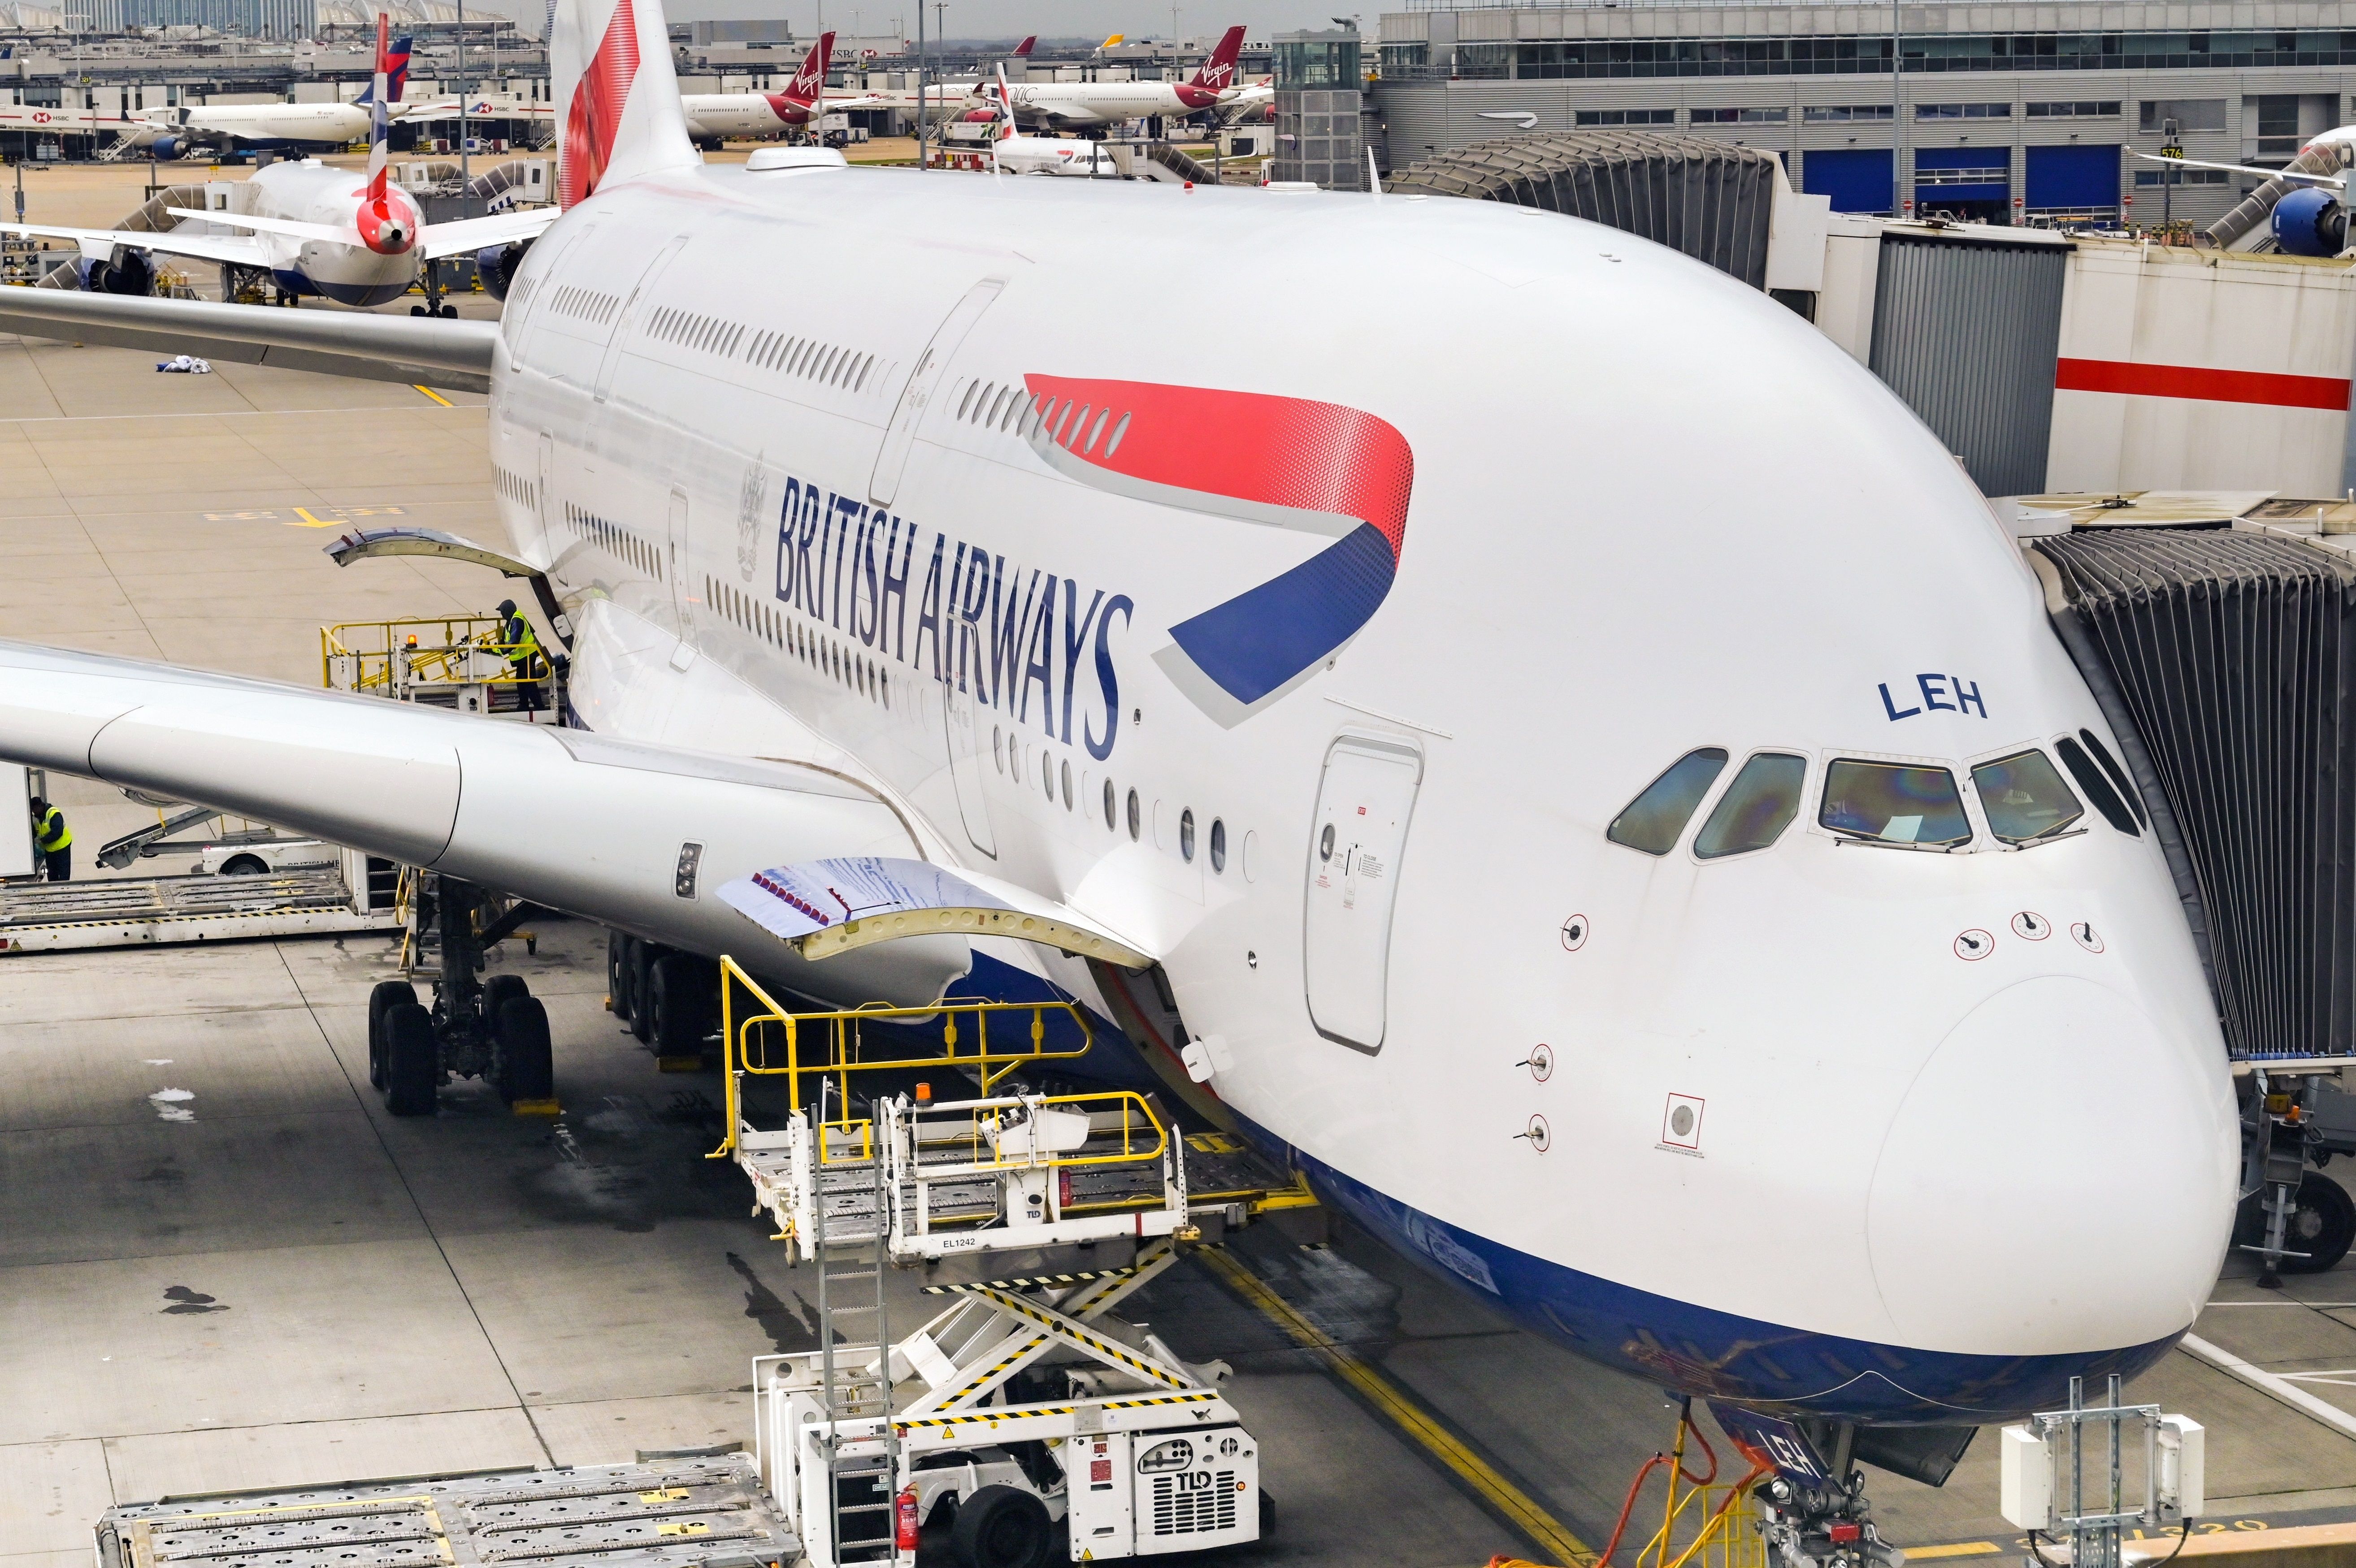 A British Airways A380 at the gate.